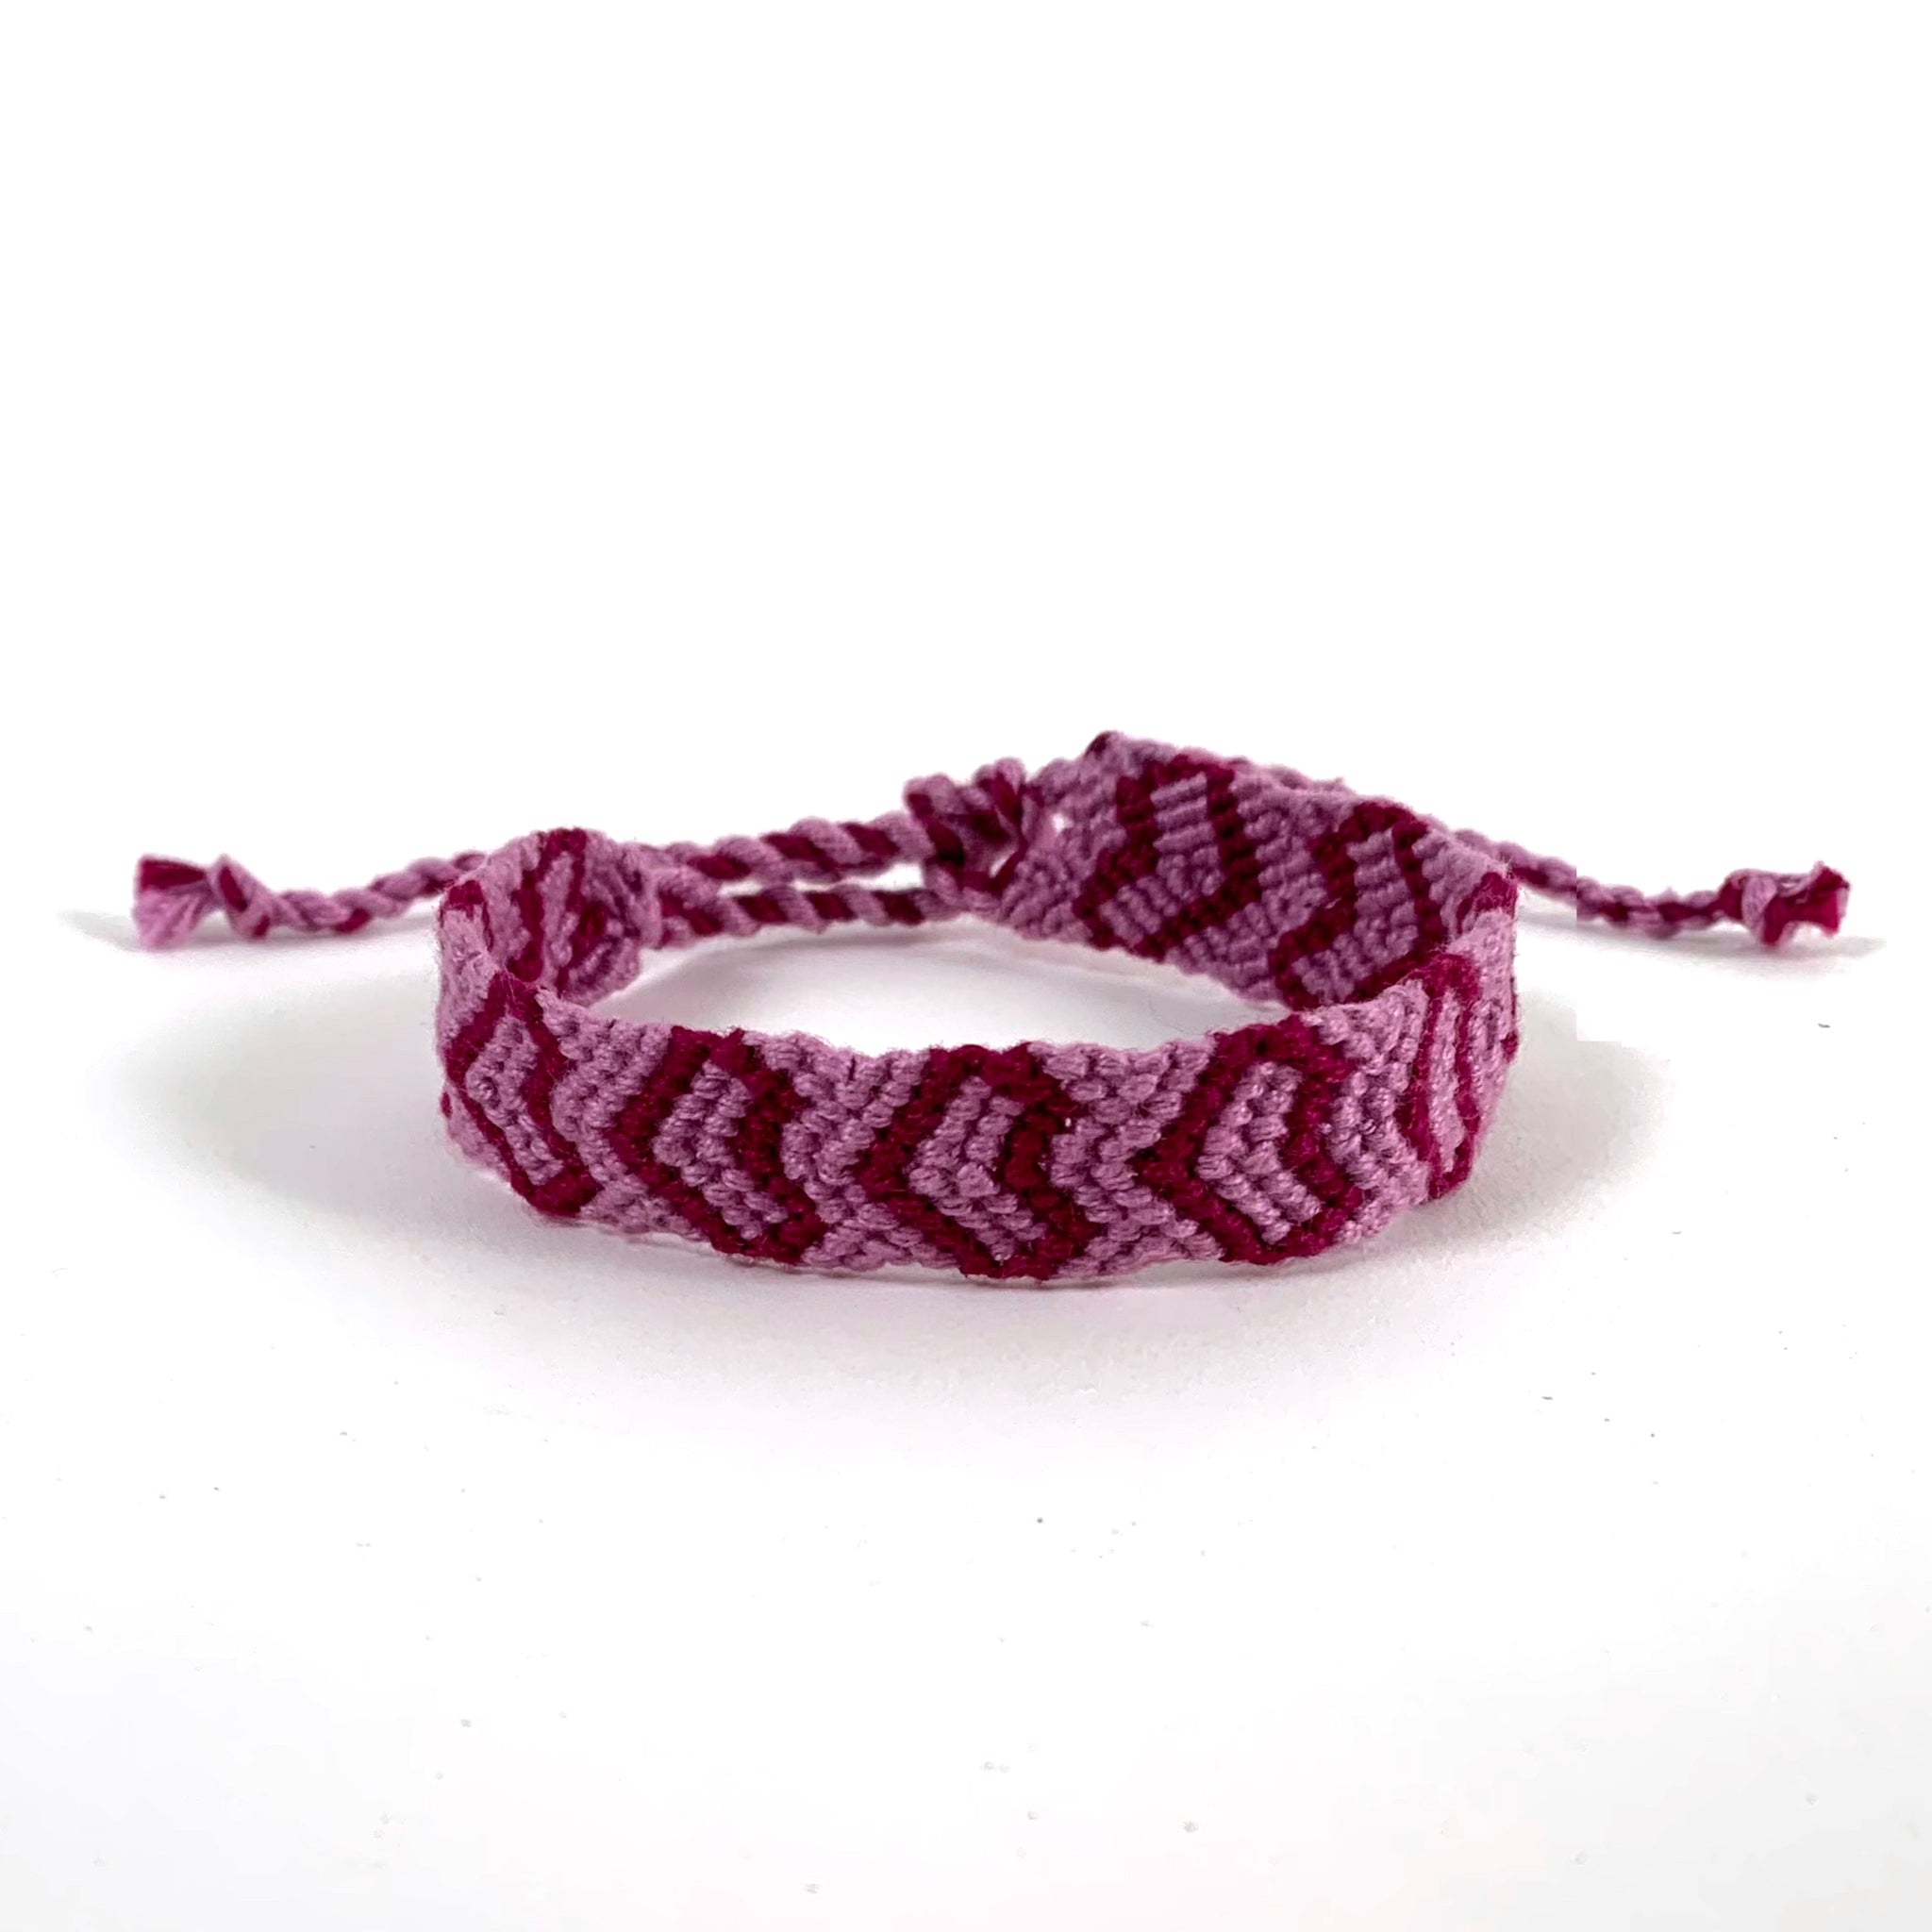 Vector rainbow lgbt handmade hippie heart friendship bracelet of threads.  4676858 Vector Art at Vecteezy